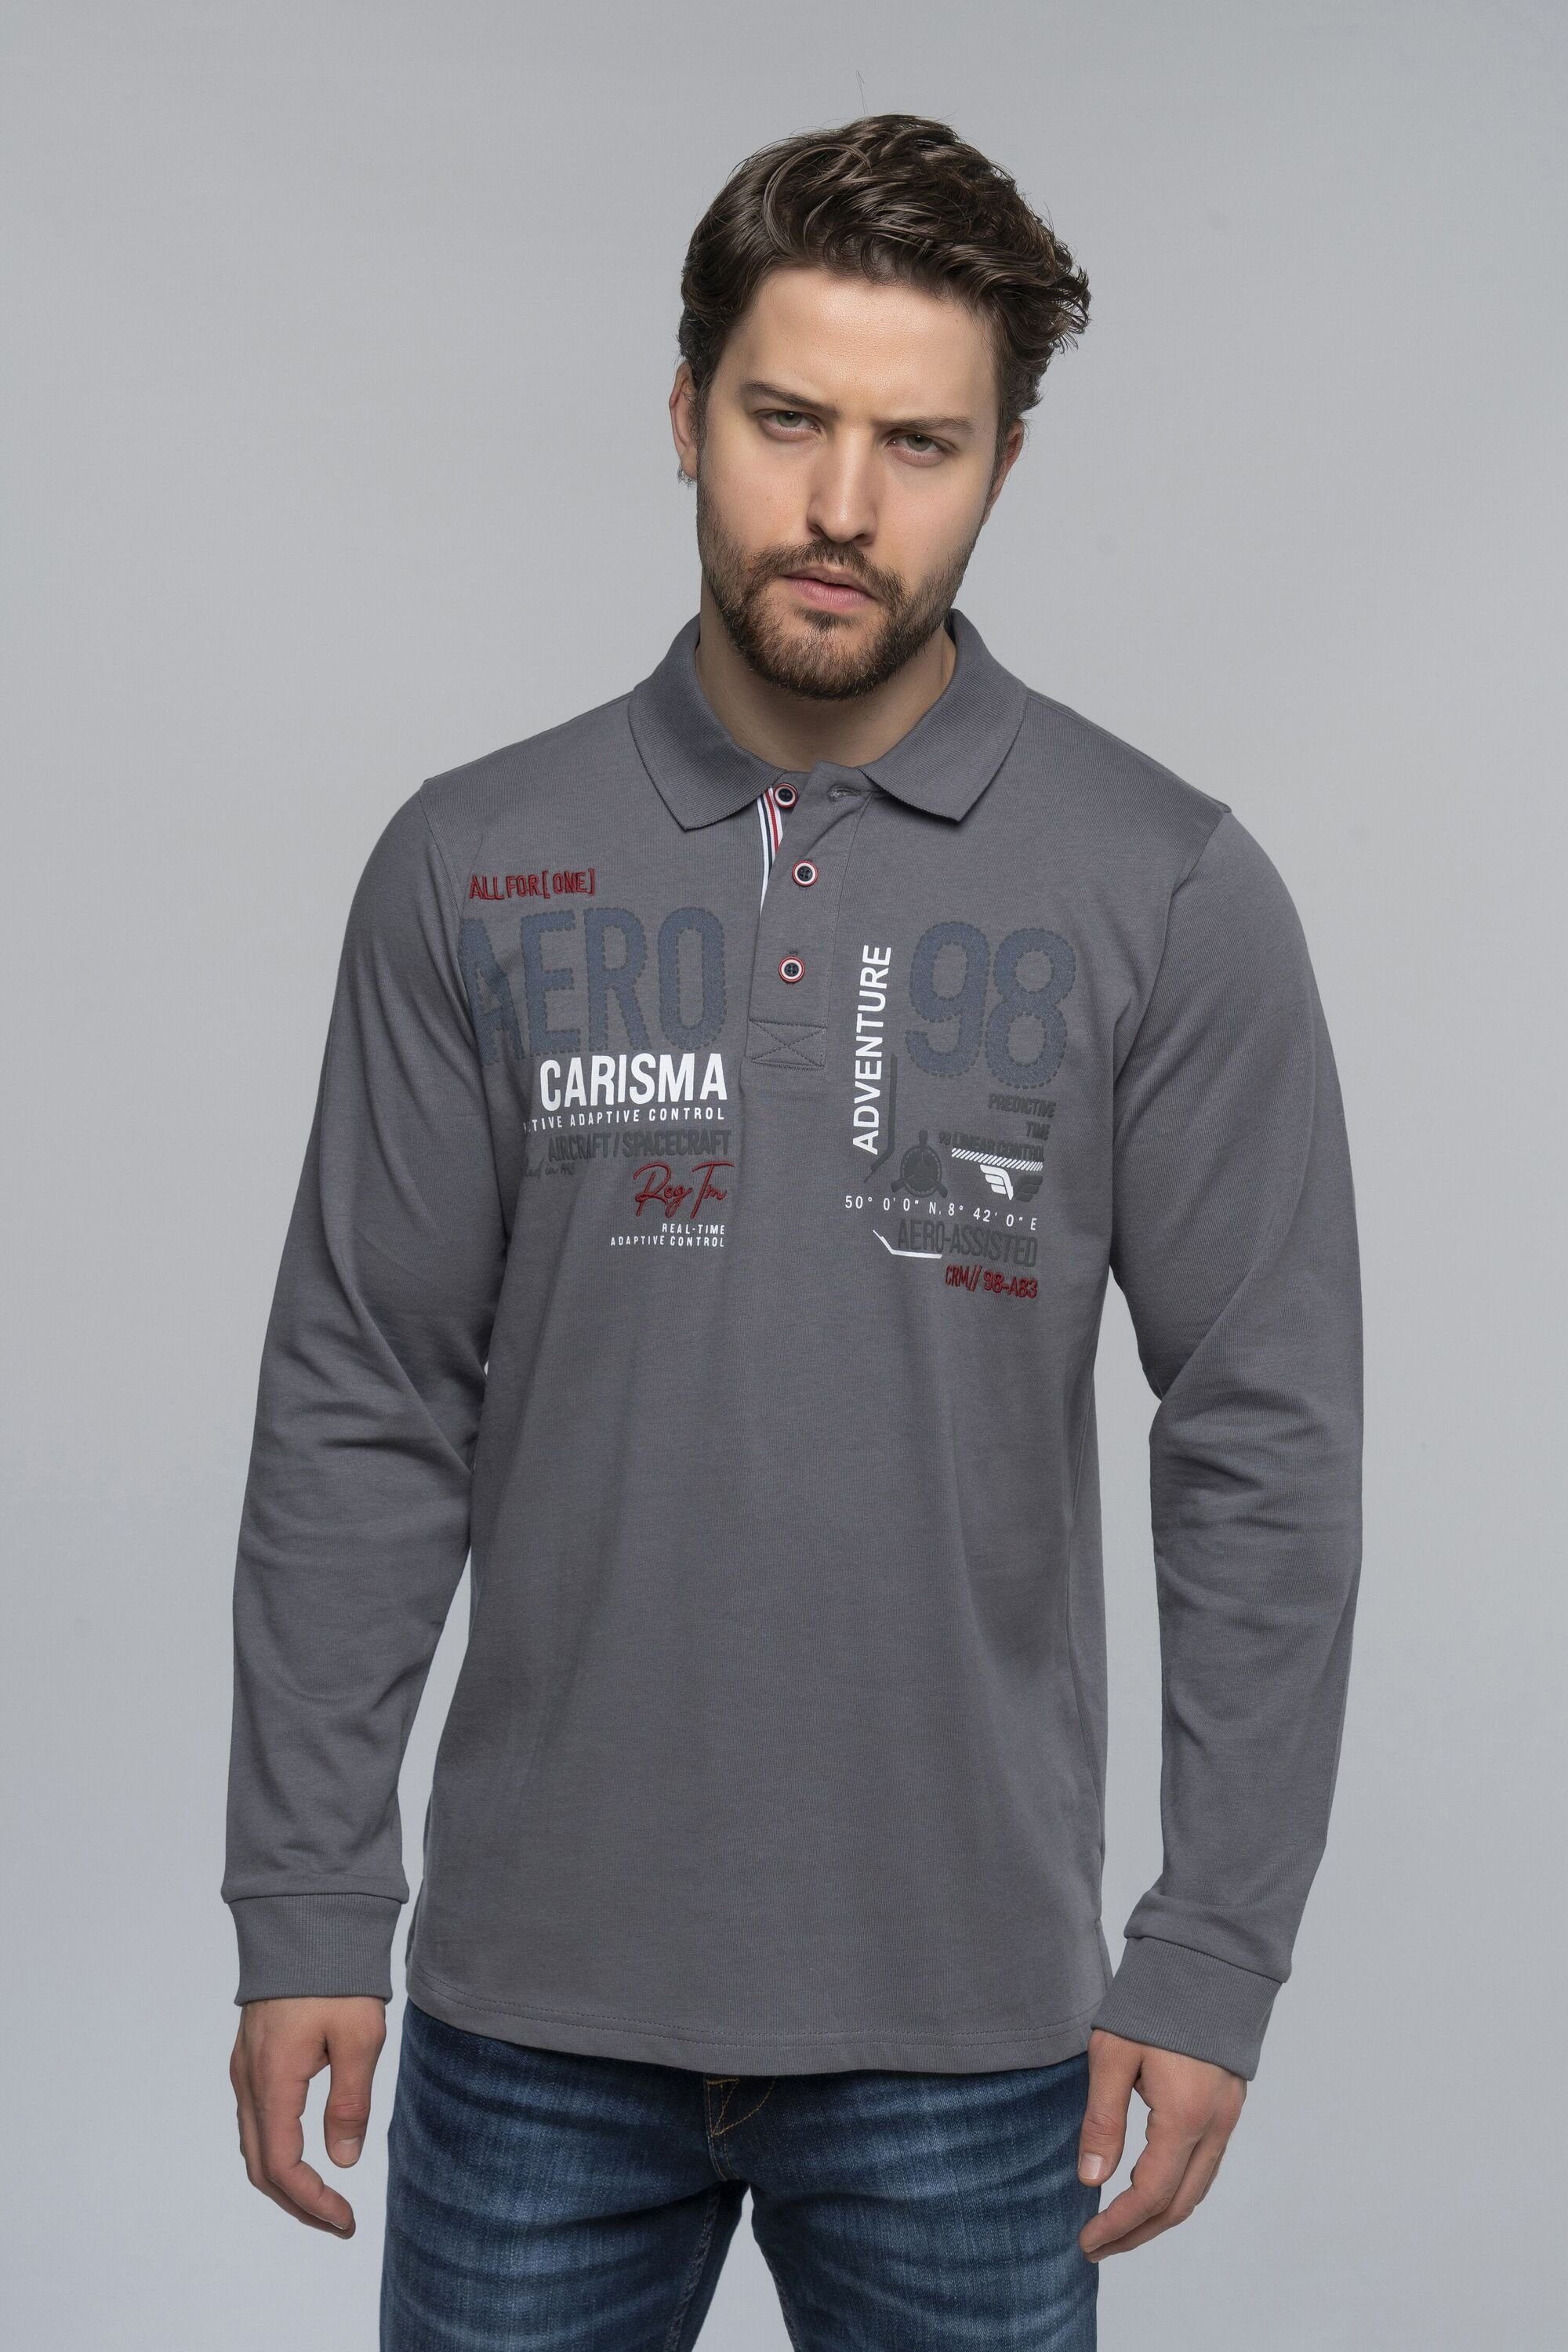 CARISMA Poloshirt Premium Langarmpolo Grey | Poloshirts